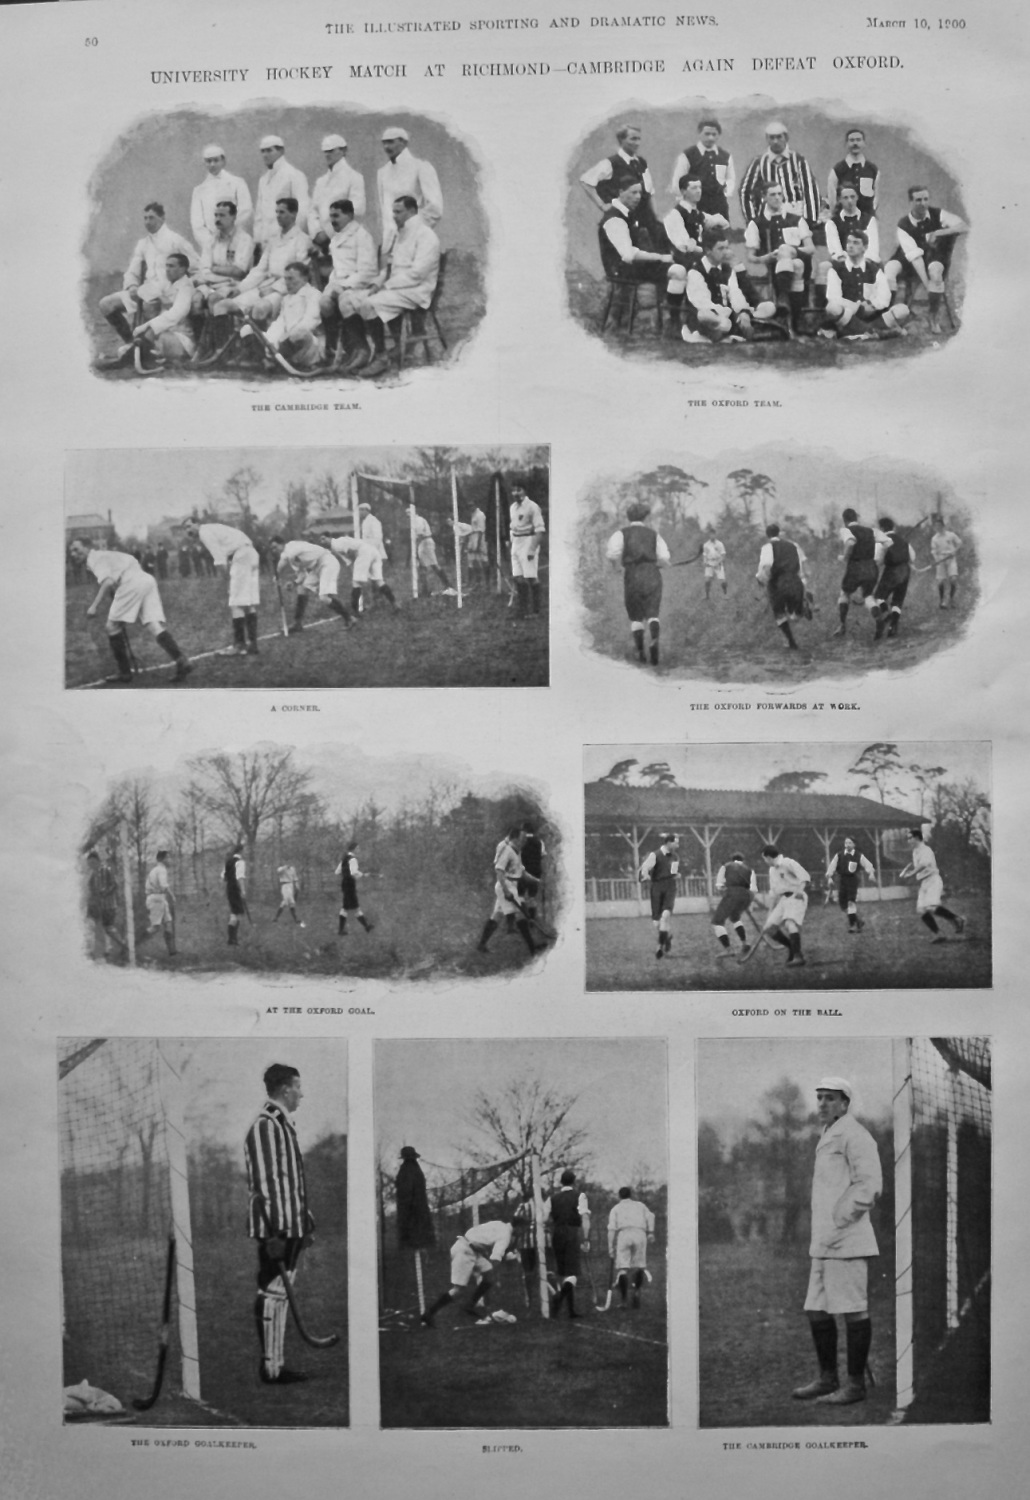 University Hockey Match at Richmond - Cambridge again defeat Oxford. 1900.